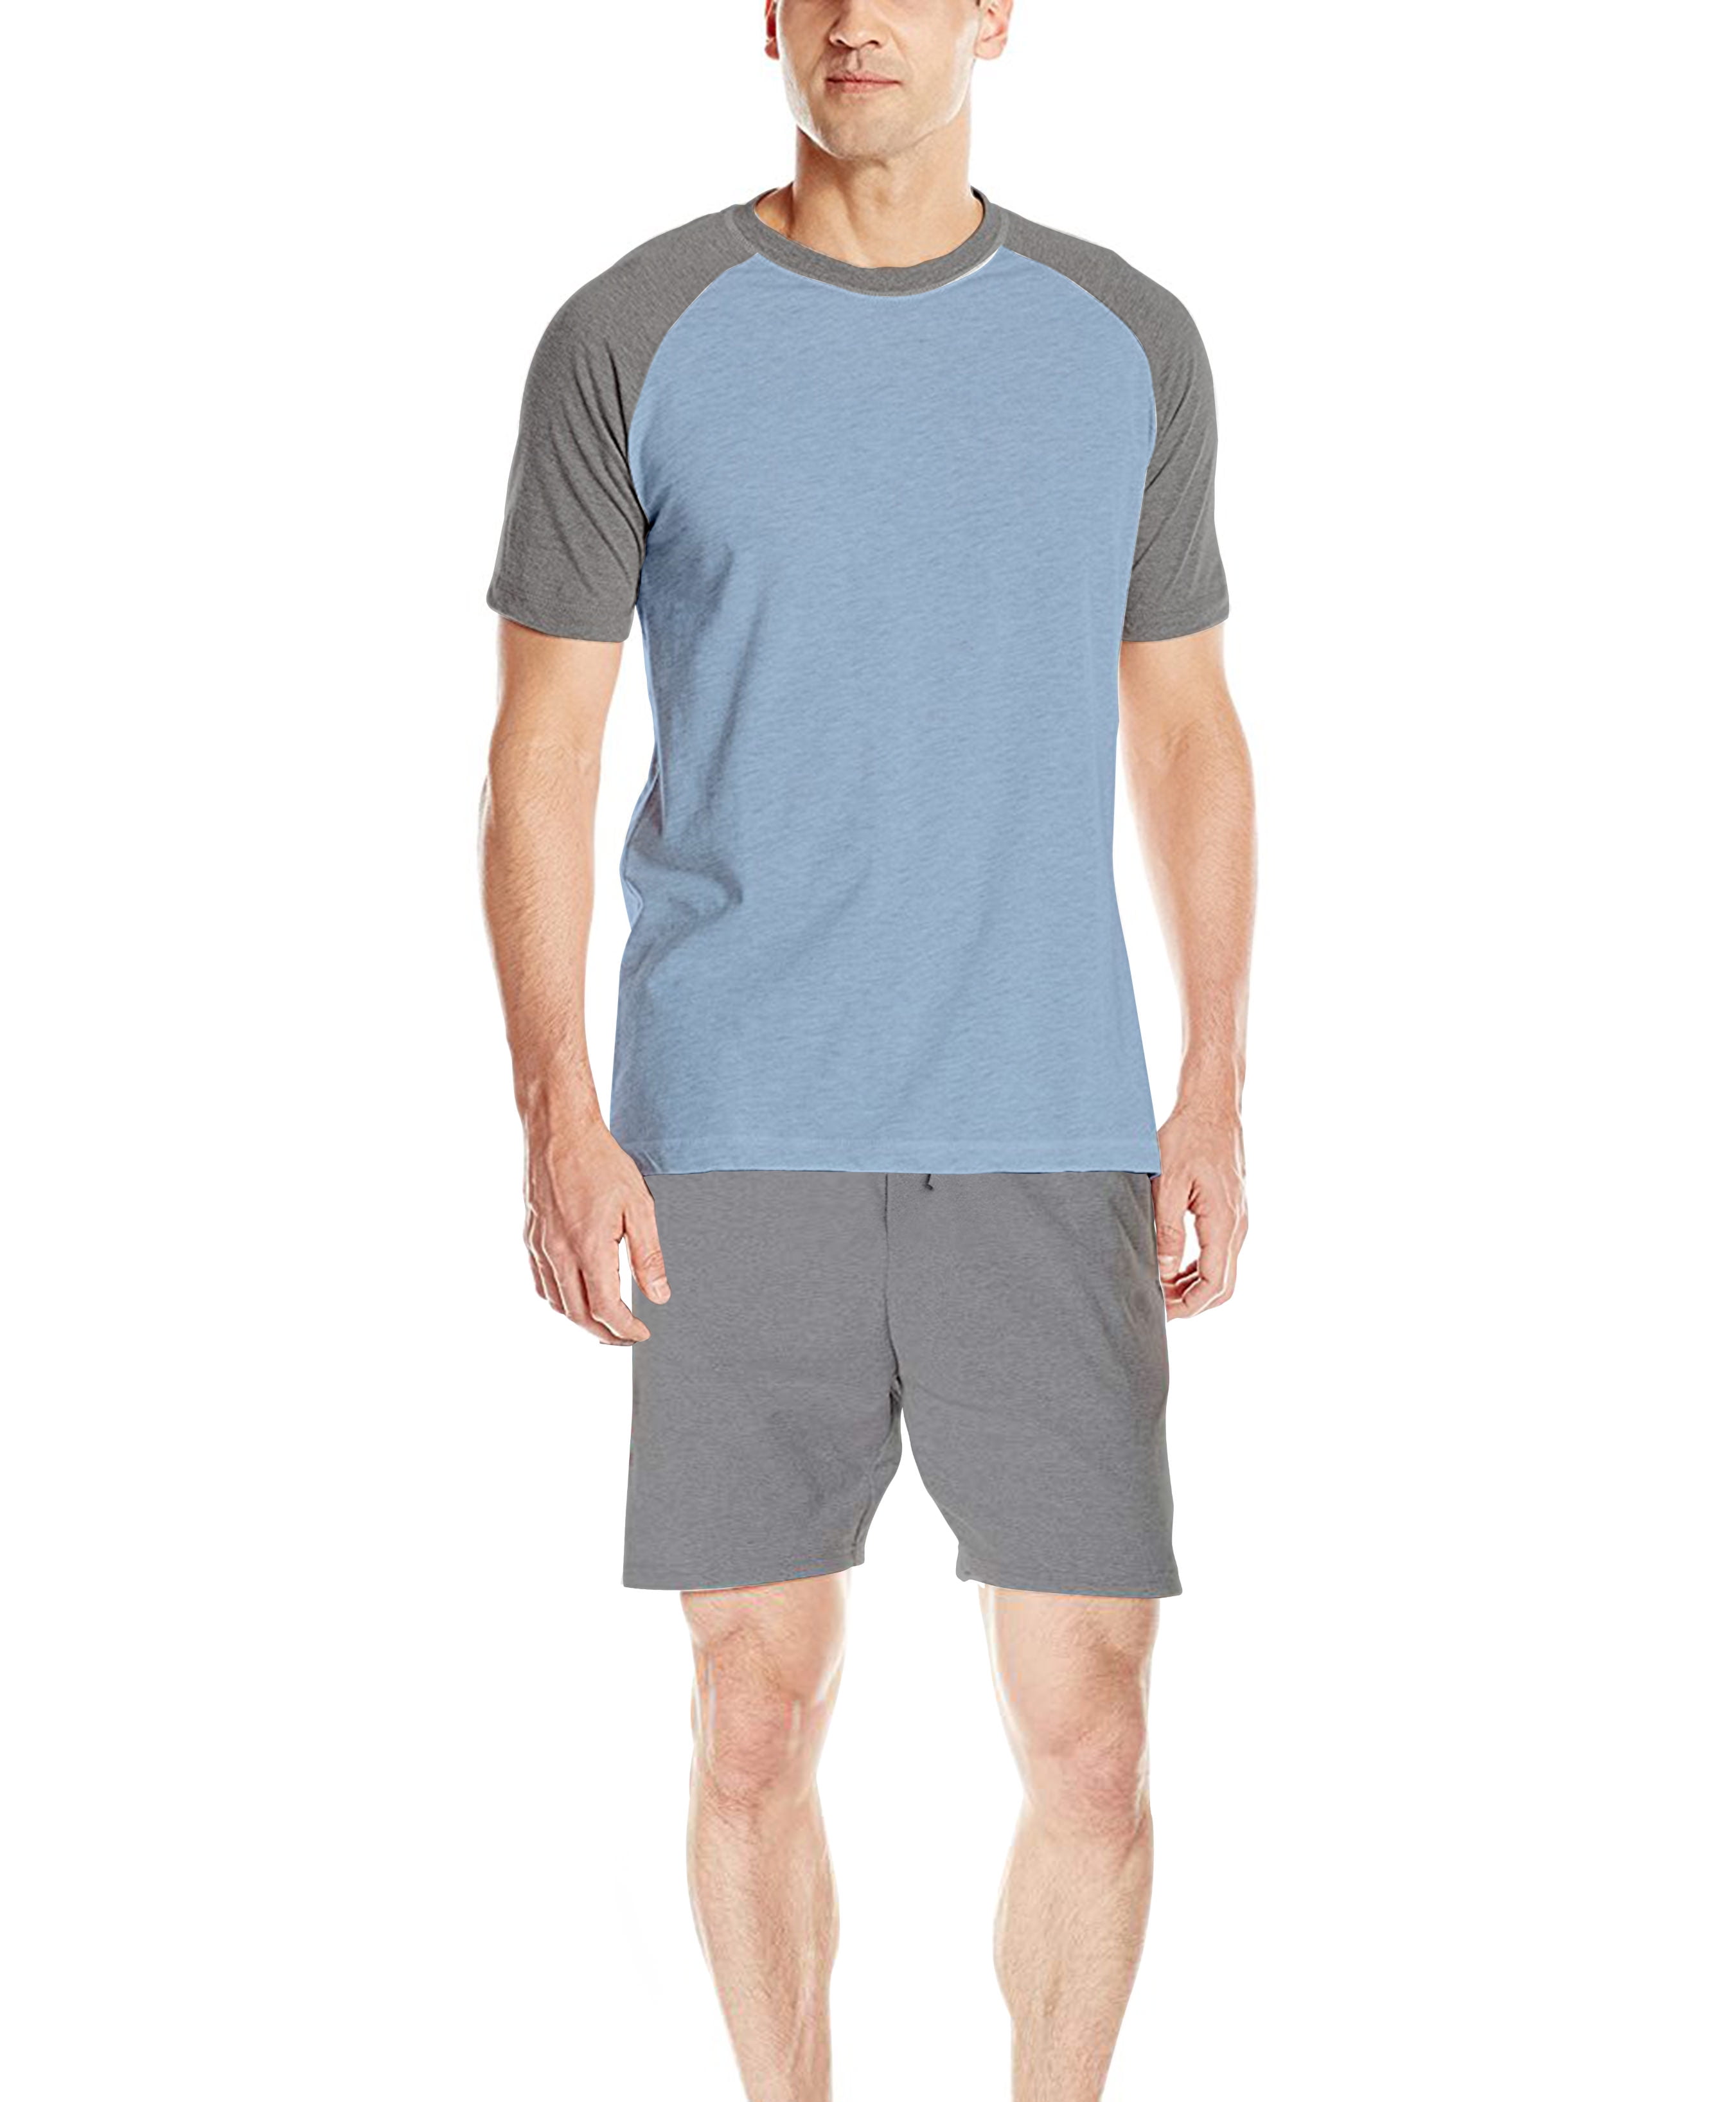 Hanes - Hanes Men's Adult X-Temp Short Sleeve Cotton Raglan Shirt and ...